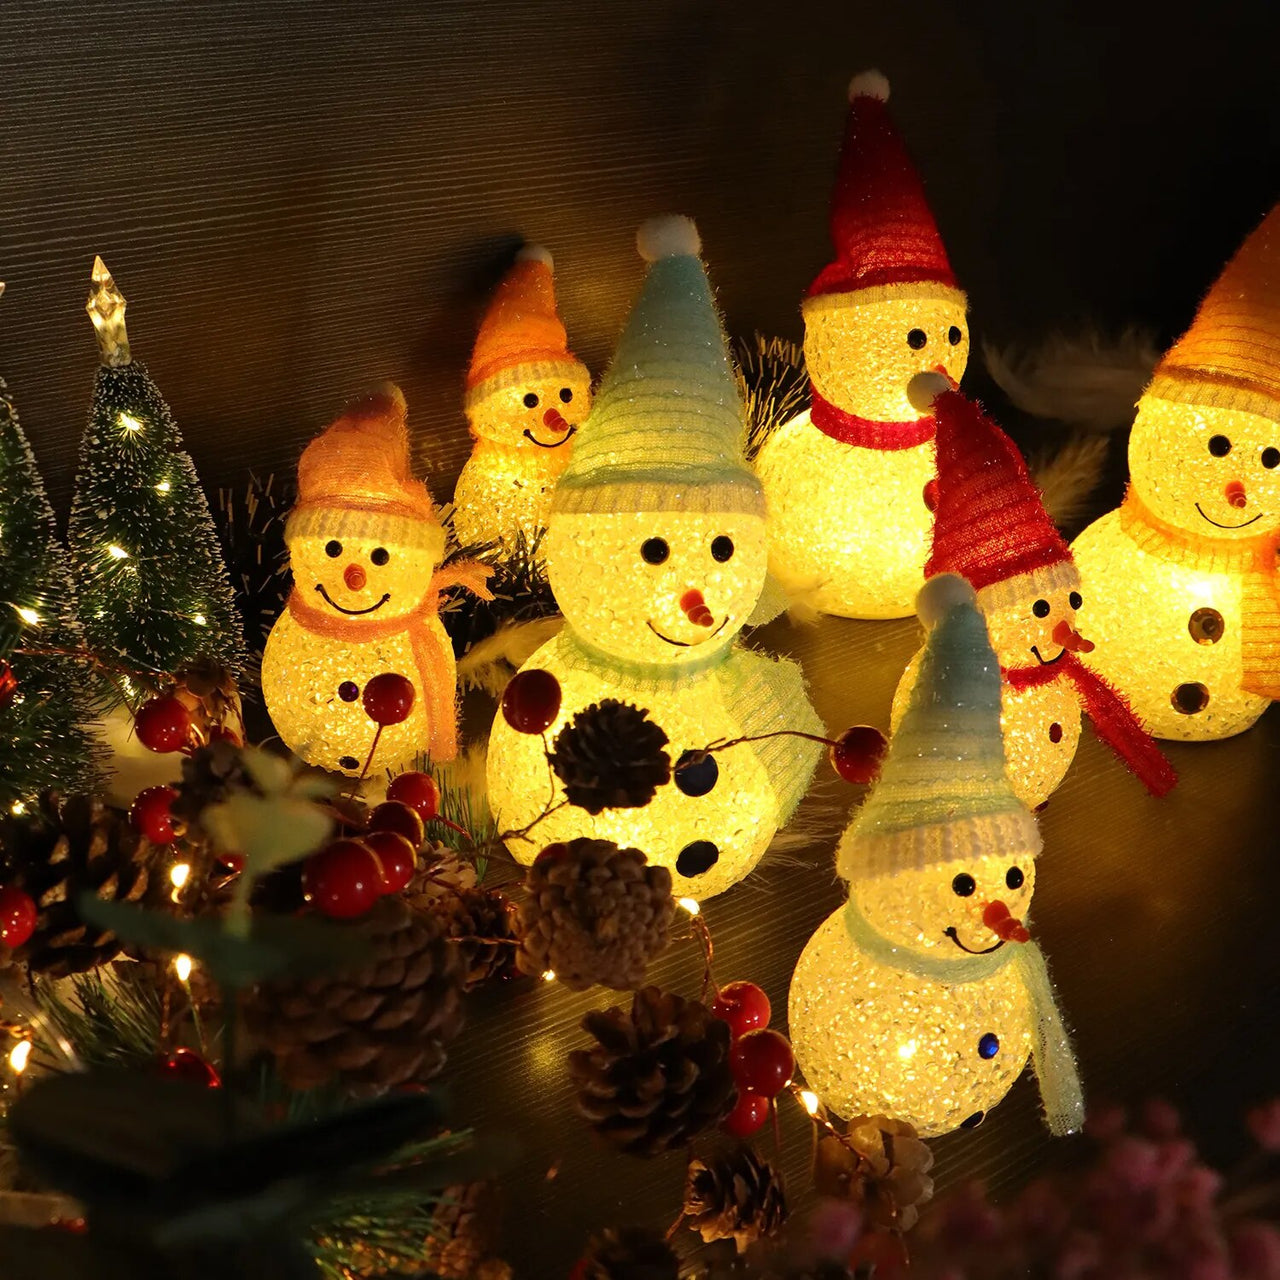 🌲 Early Christmas Sale 🎁Waterproof Solar Snowman Lamp